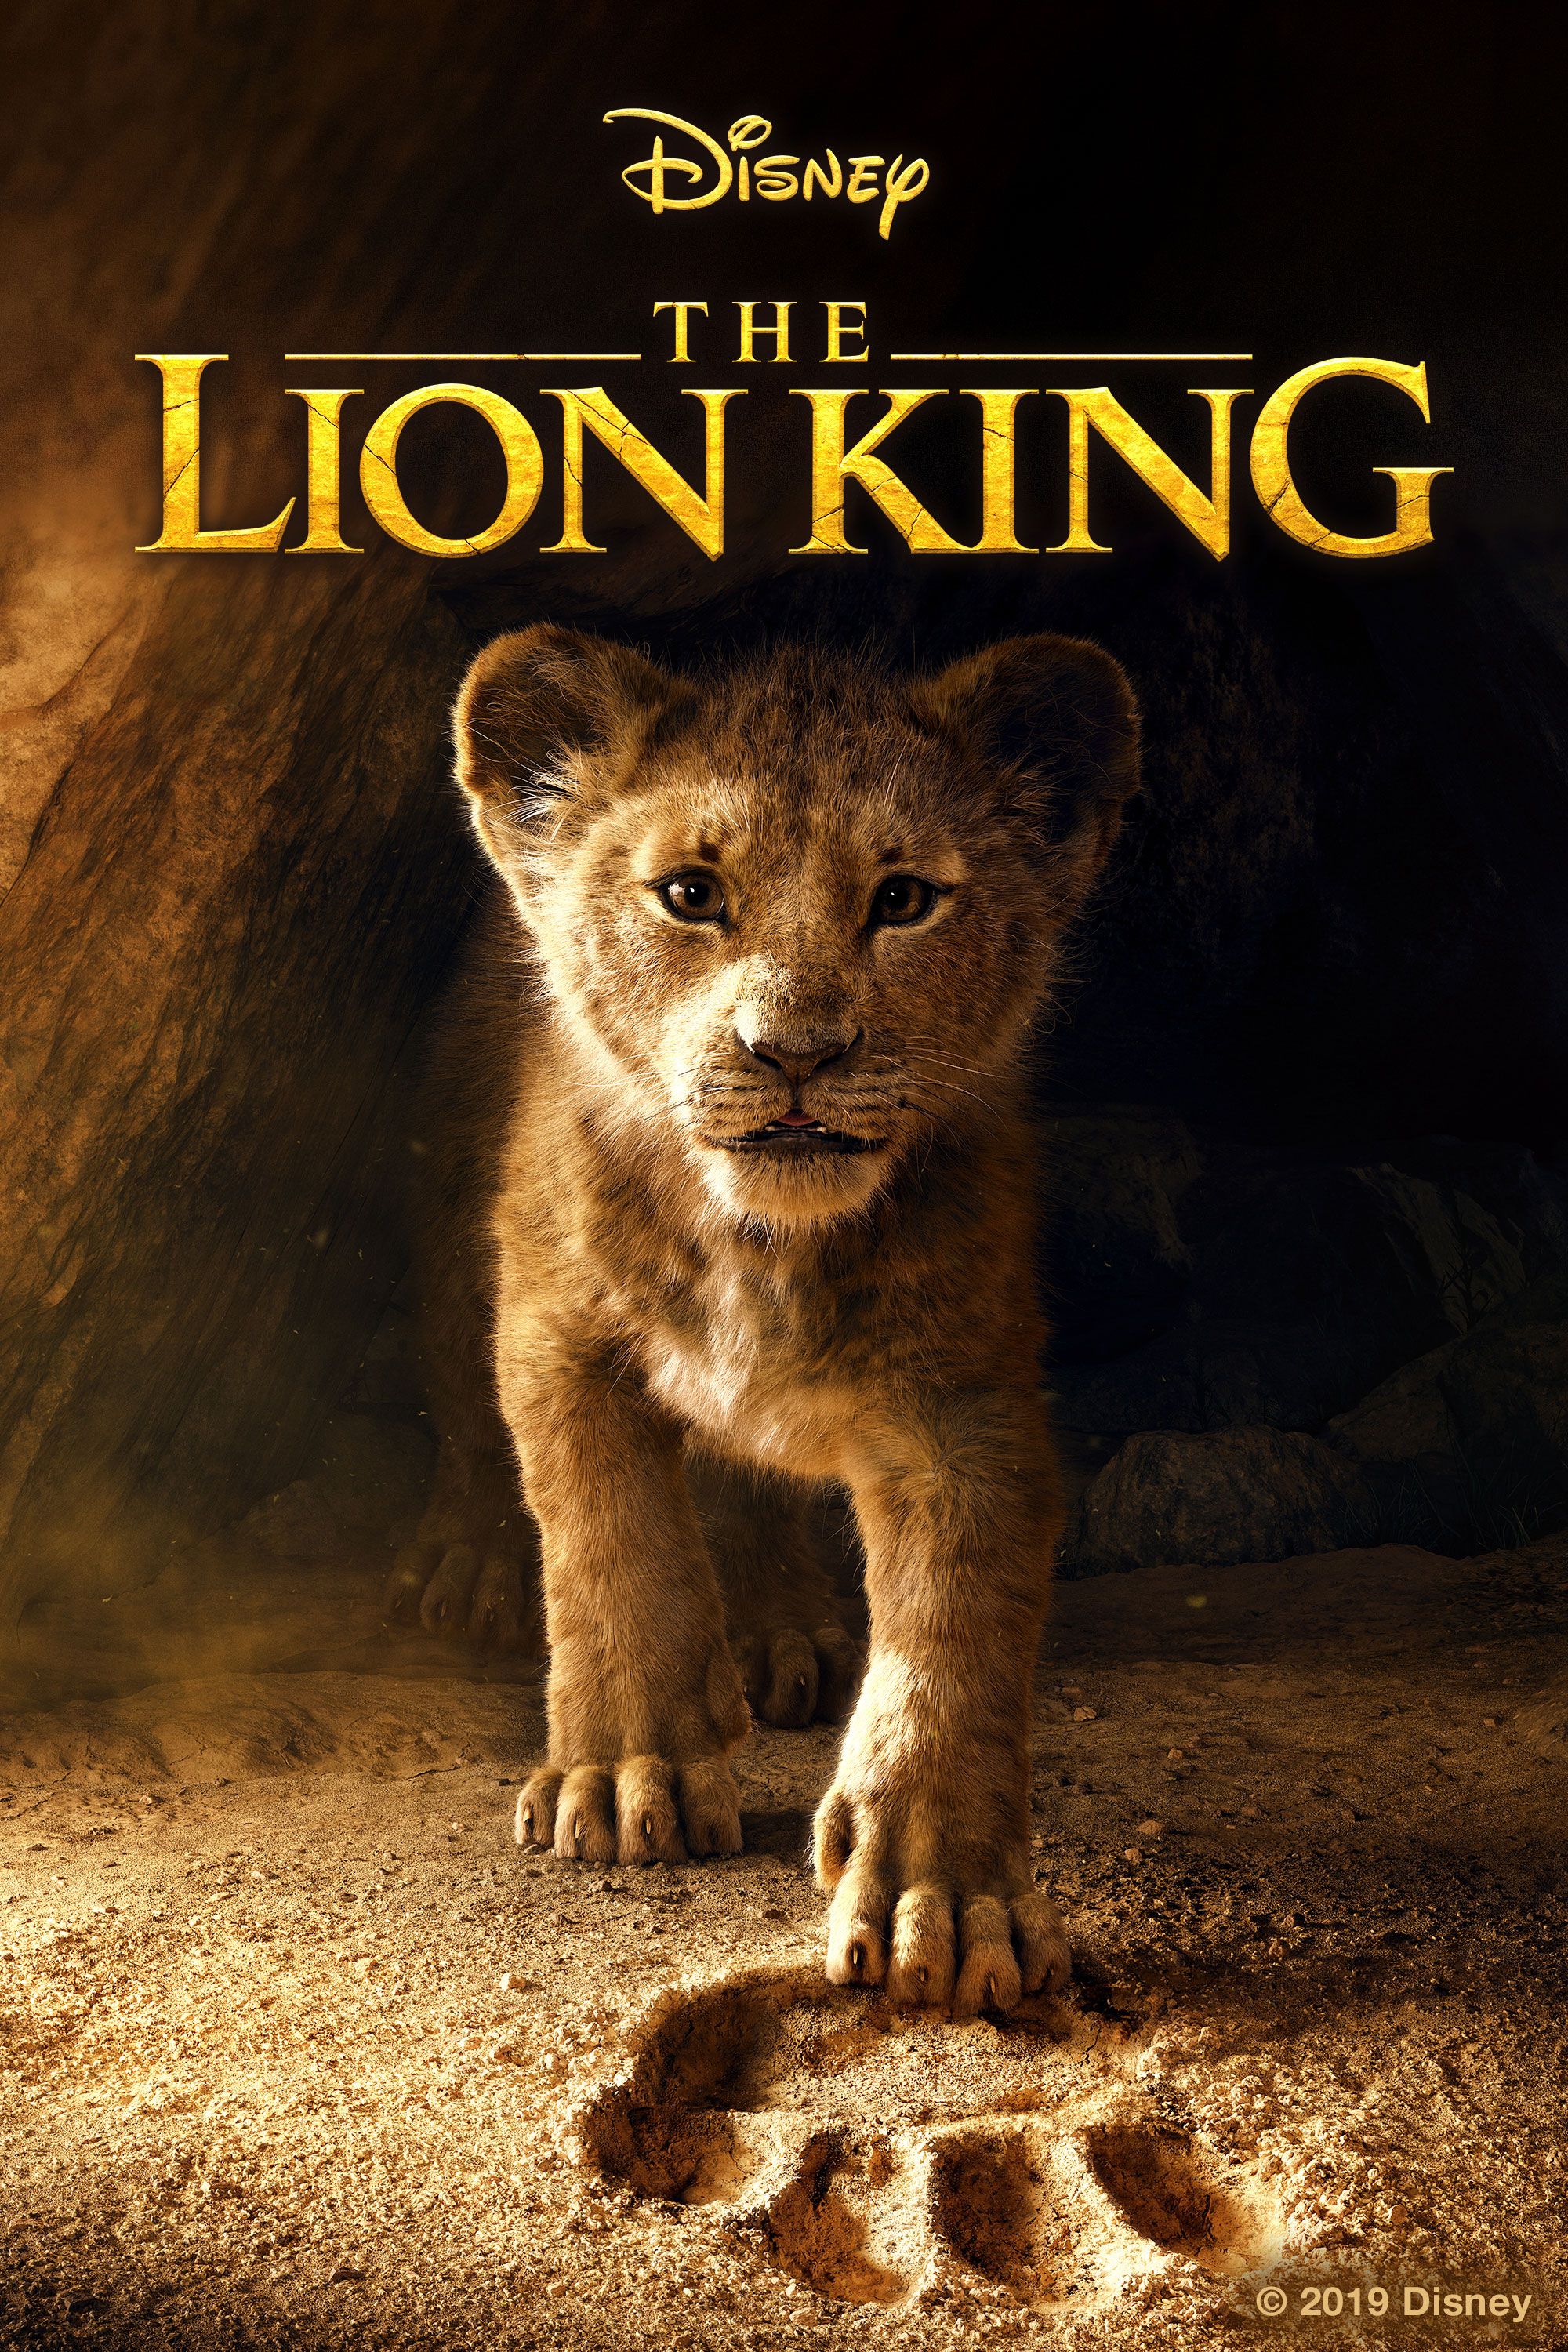 The Lion King [Includes Digital Copy] [Blu-ray_DVD] [2019] - Best Buy.jpg